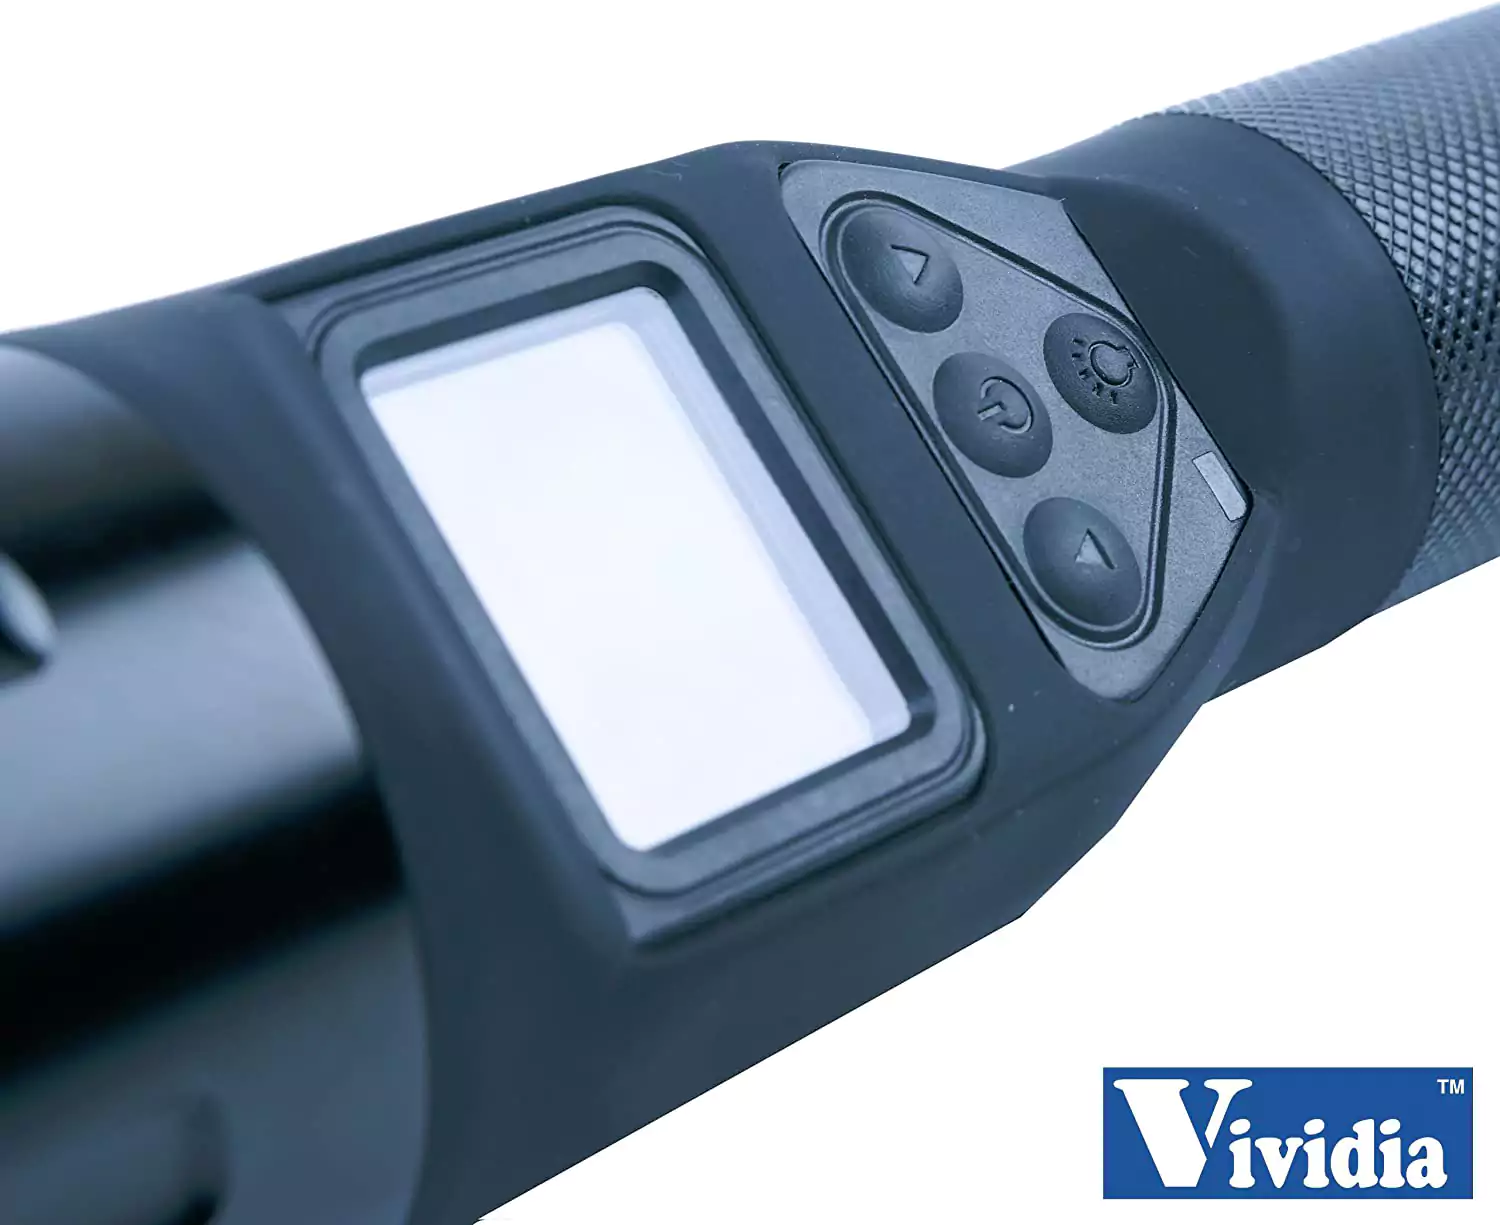 LED Flashlight, Vividia Waterproof LED Flashlight